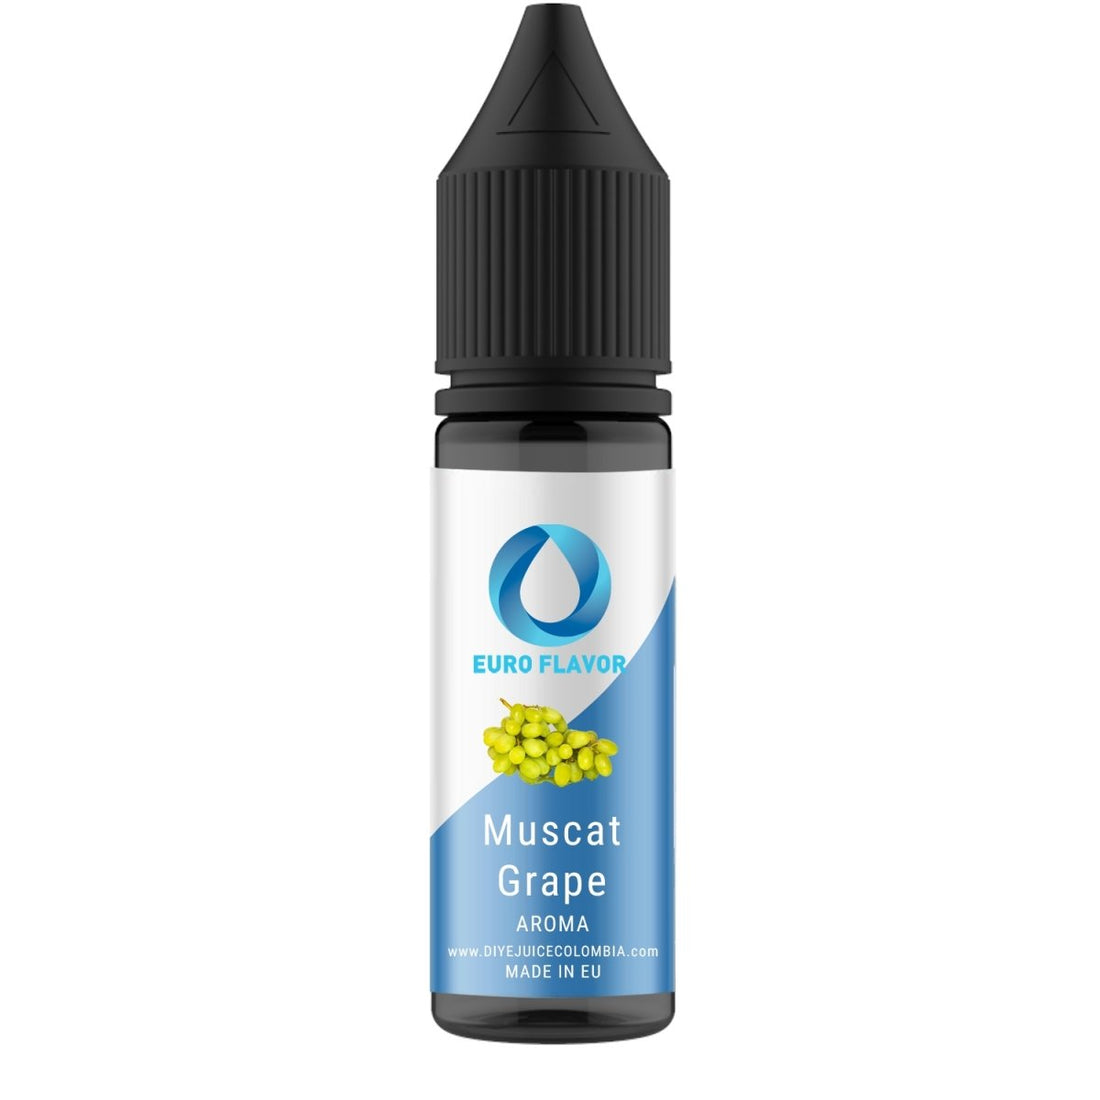 Muscat Grape EF - Aroma - Euro Flavor | AR-EF-MGR